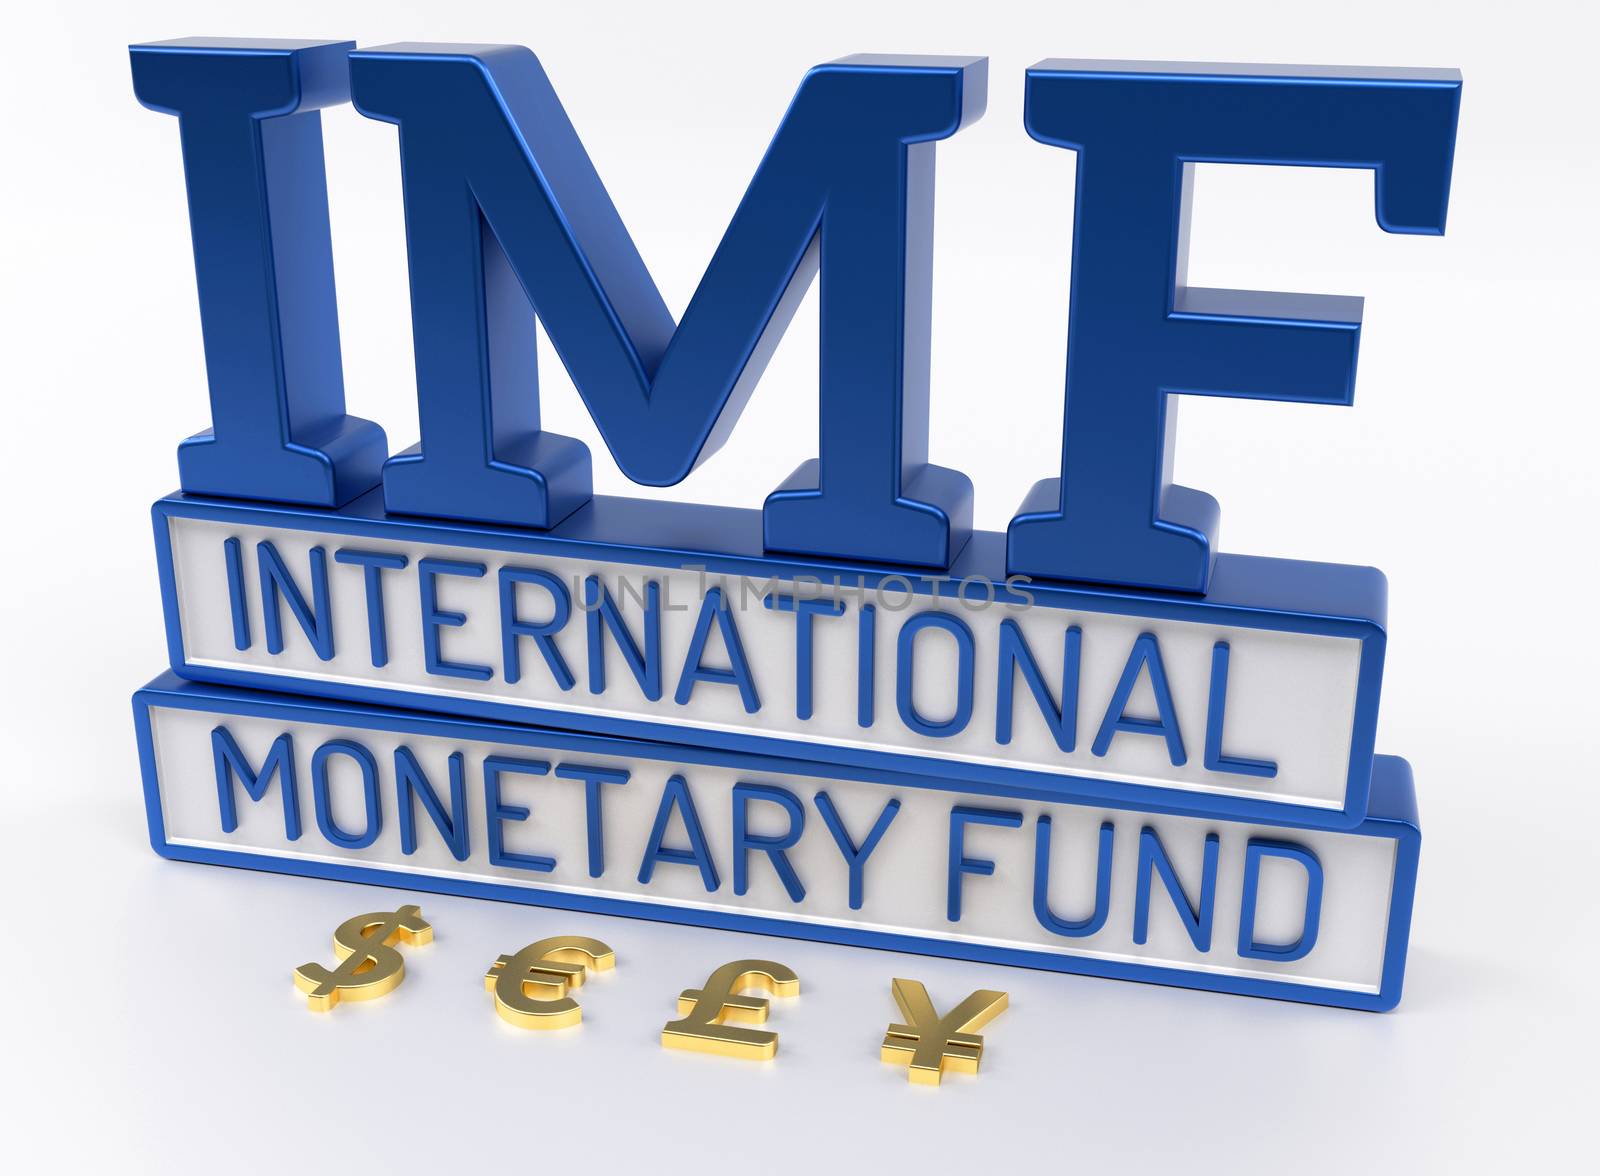 IMF - International Monetary Fund, World Bank - 3D Render by akaprinay